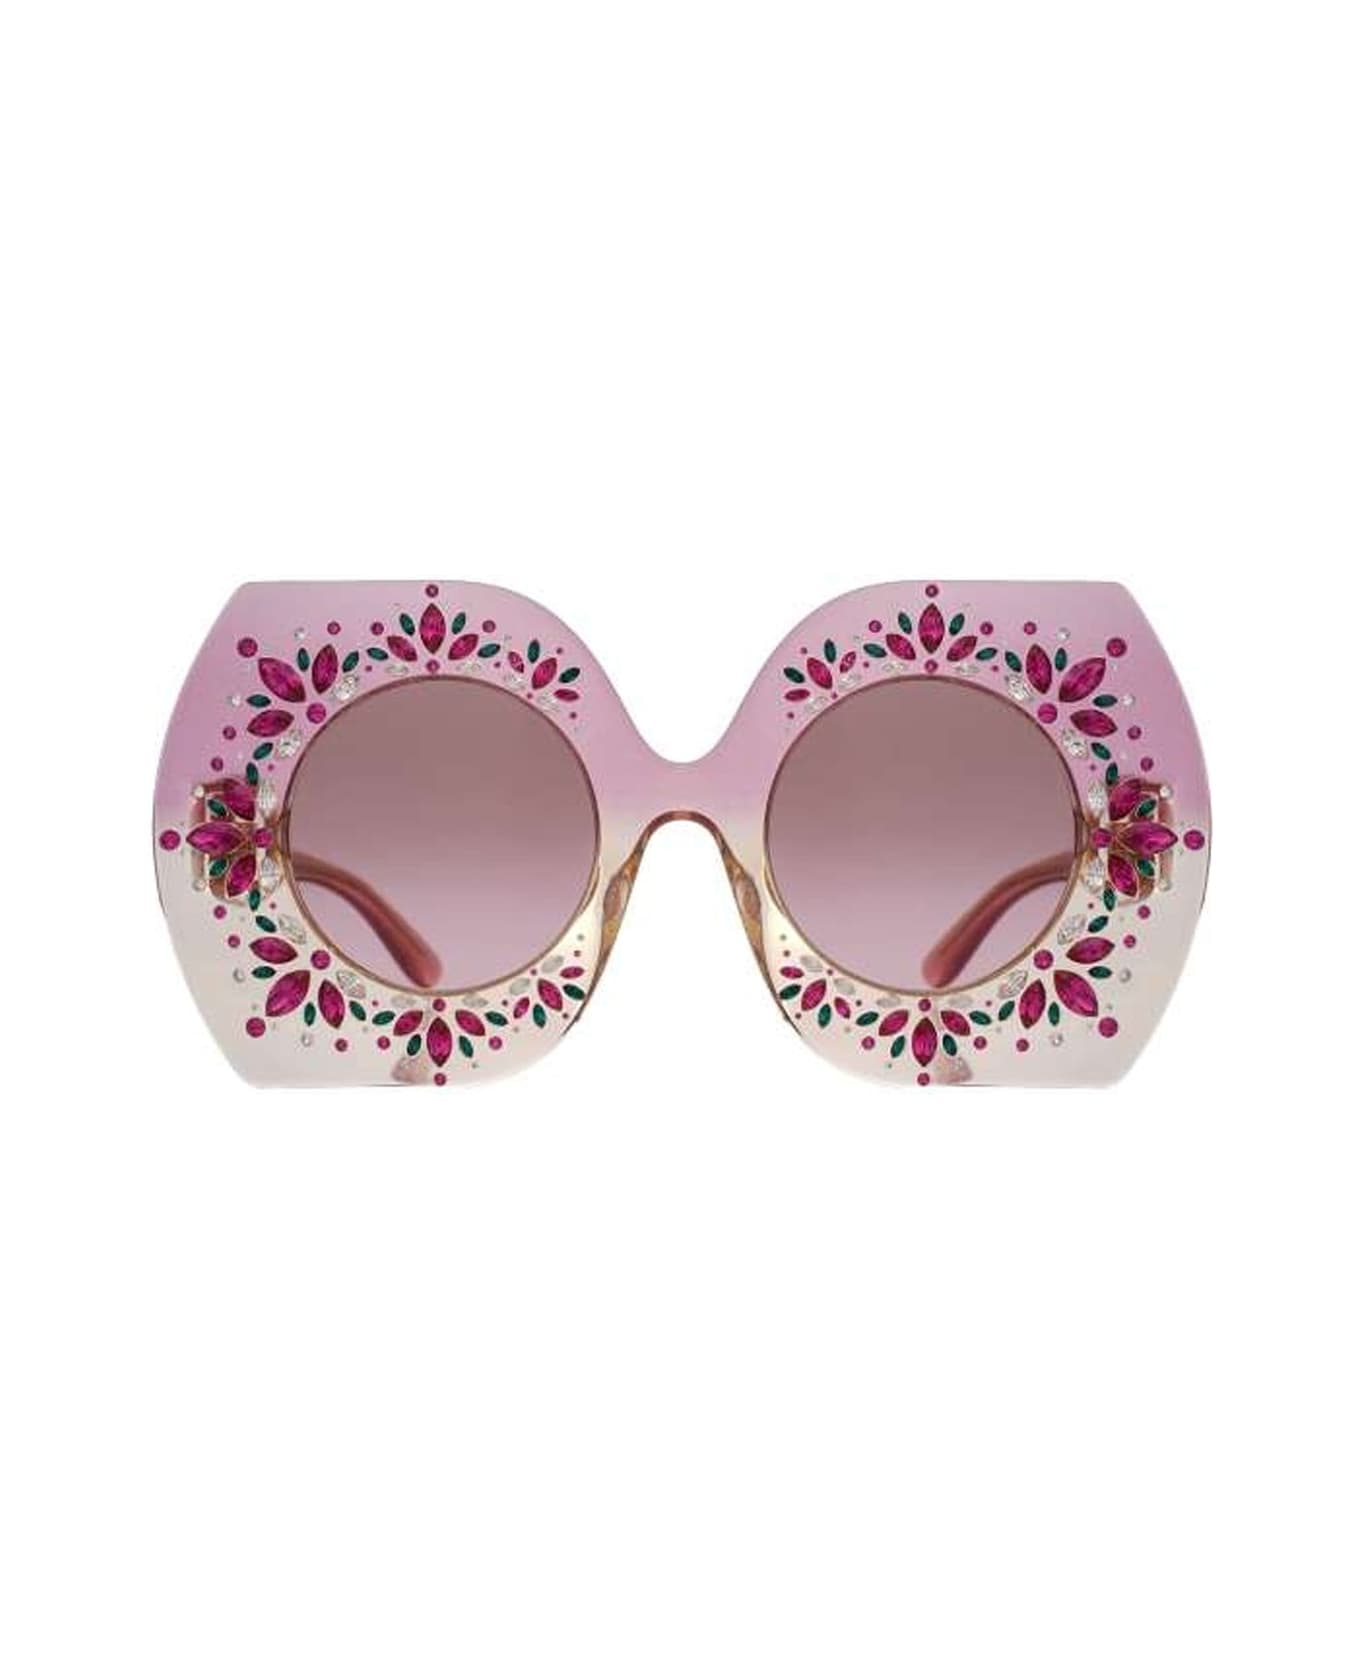 Dolce & Gabbana Limited Edition Crystal Sunglasses - Pink サングラス